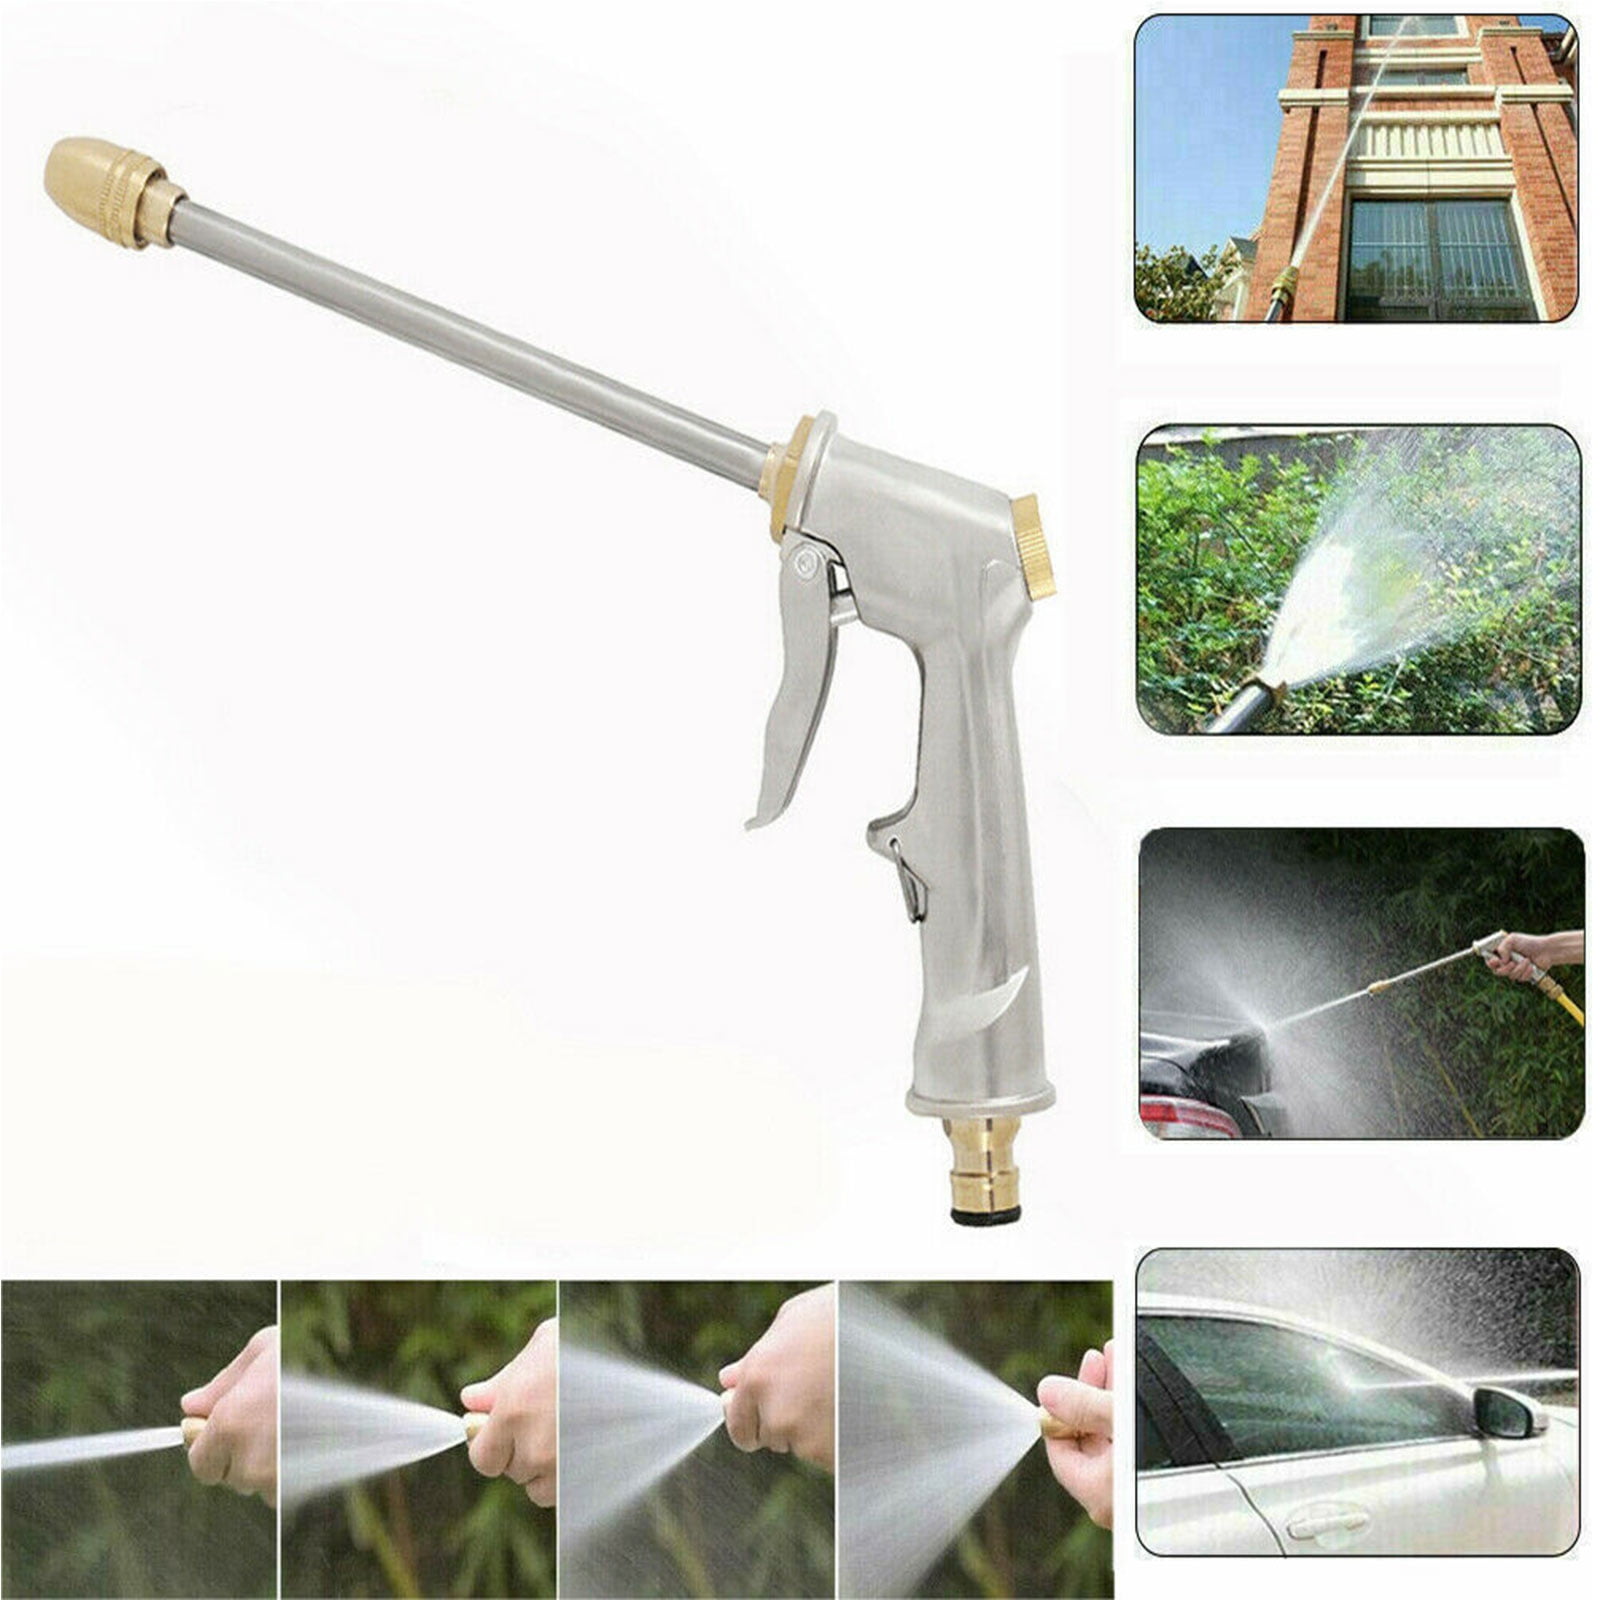 Crenova Hose Nozzles Leakproof High Pressure Spray Gun Garden Water Gun US Hot 